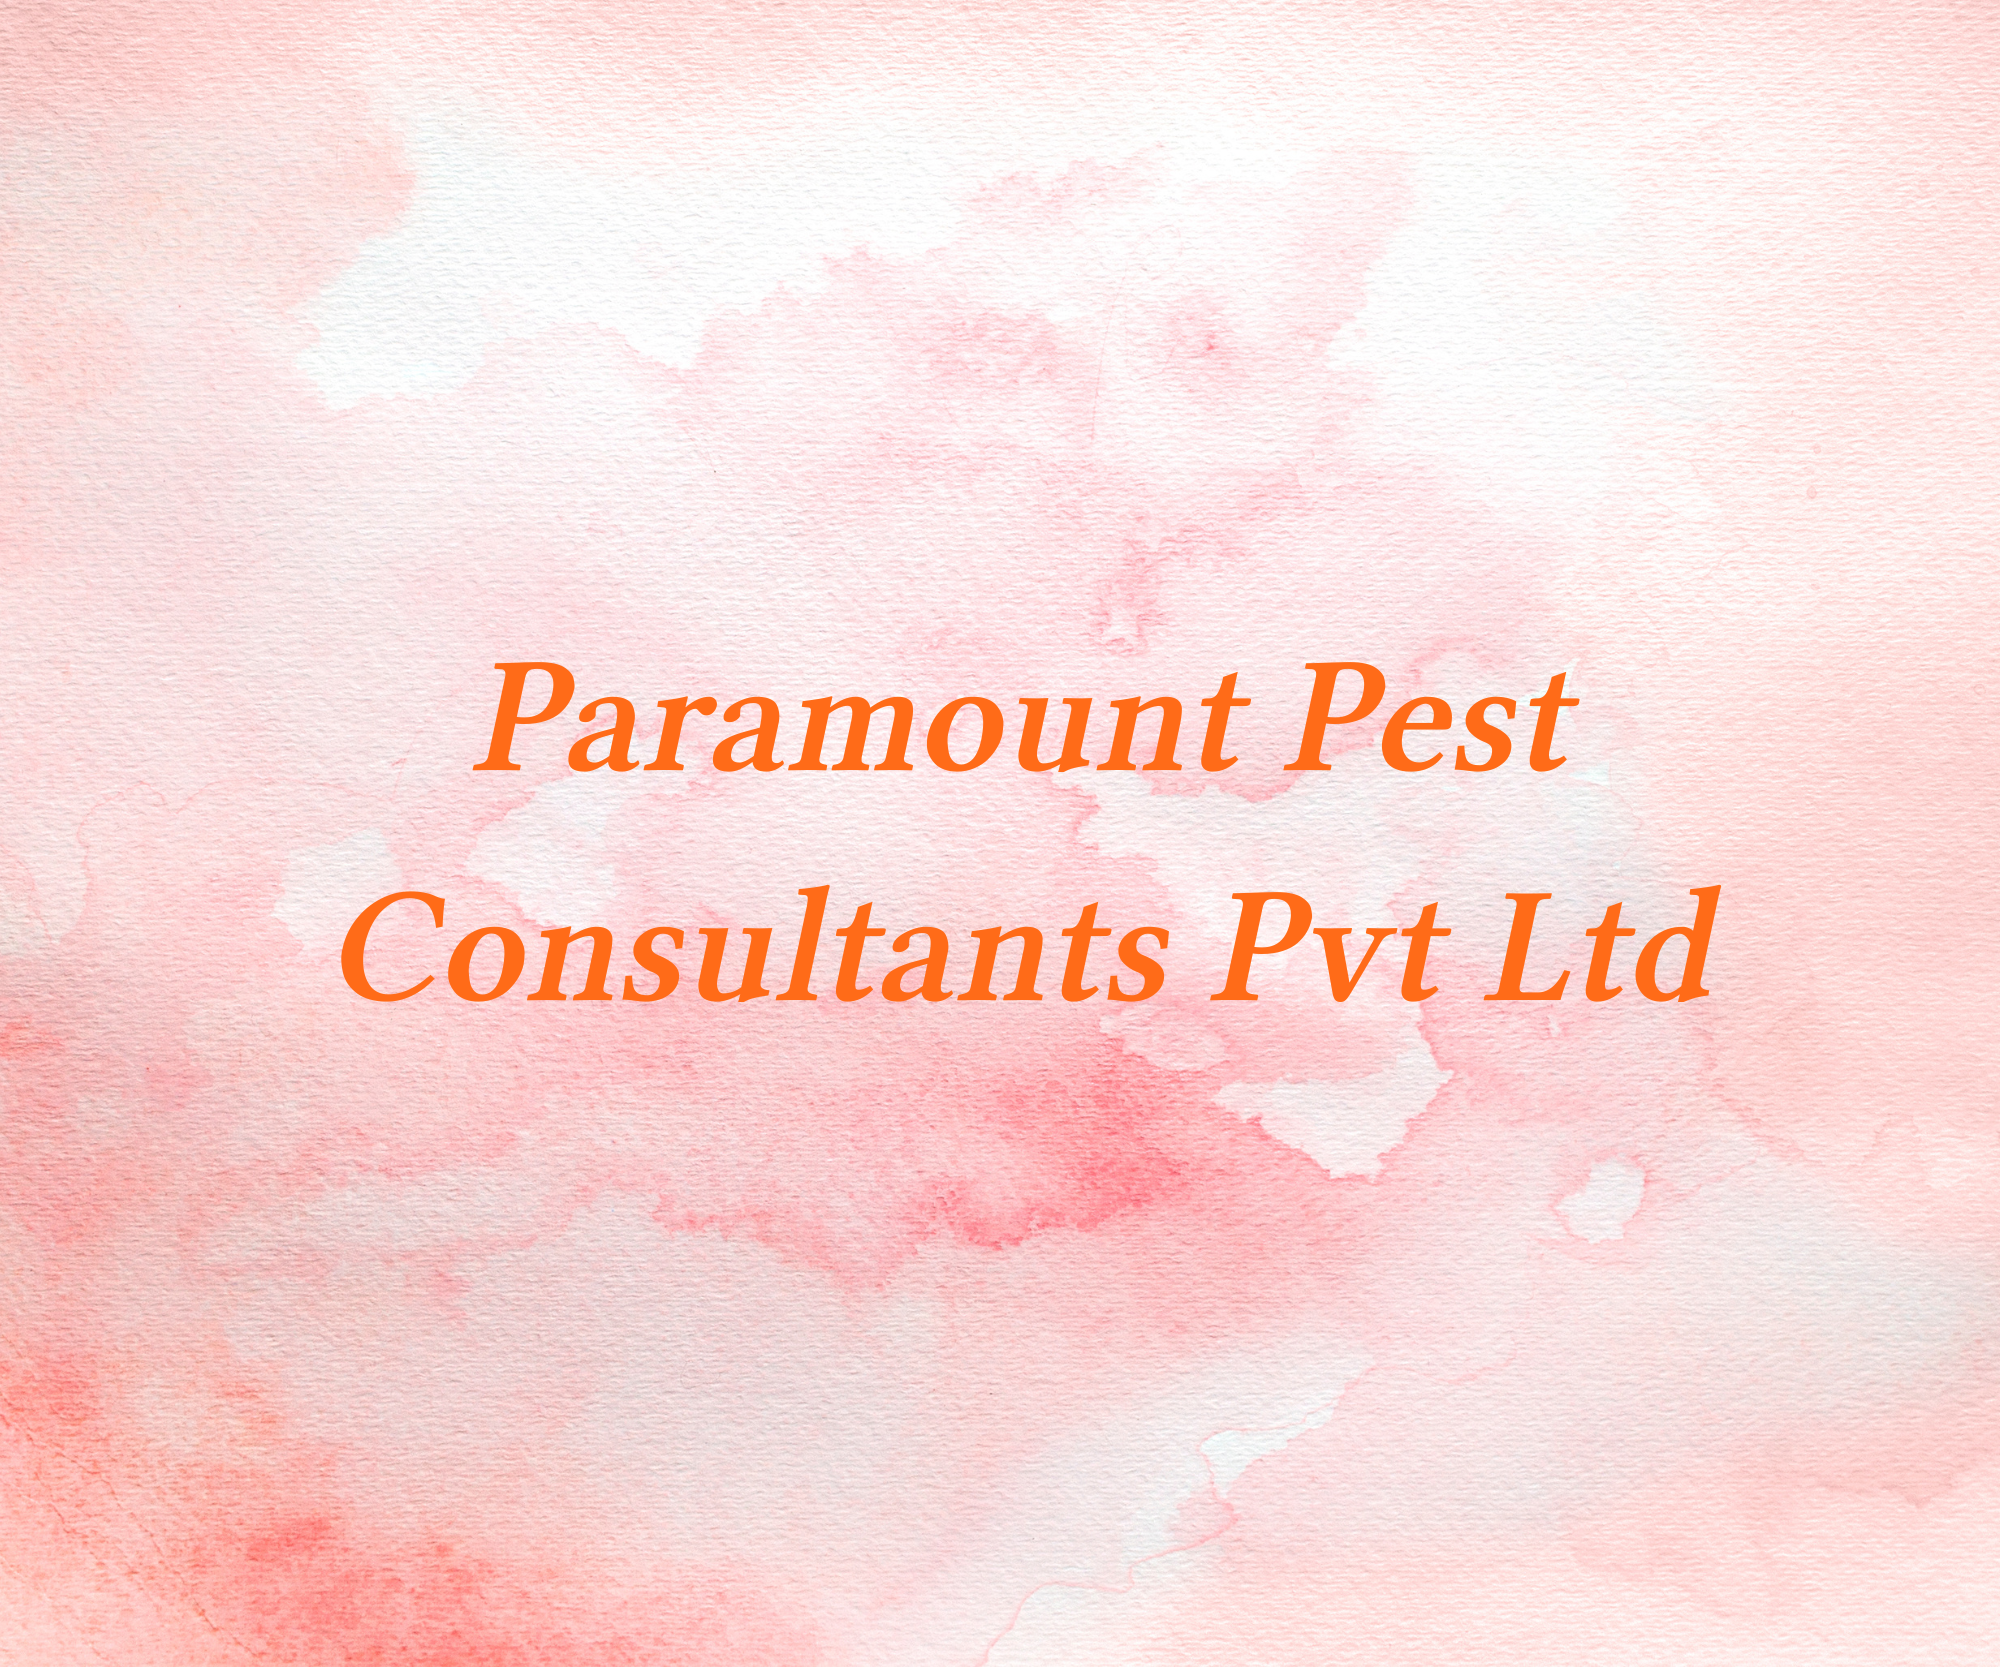 Paramount Pest Consultants Pvt Ltd 